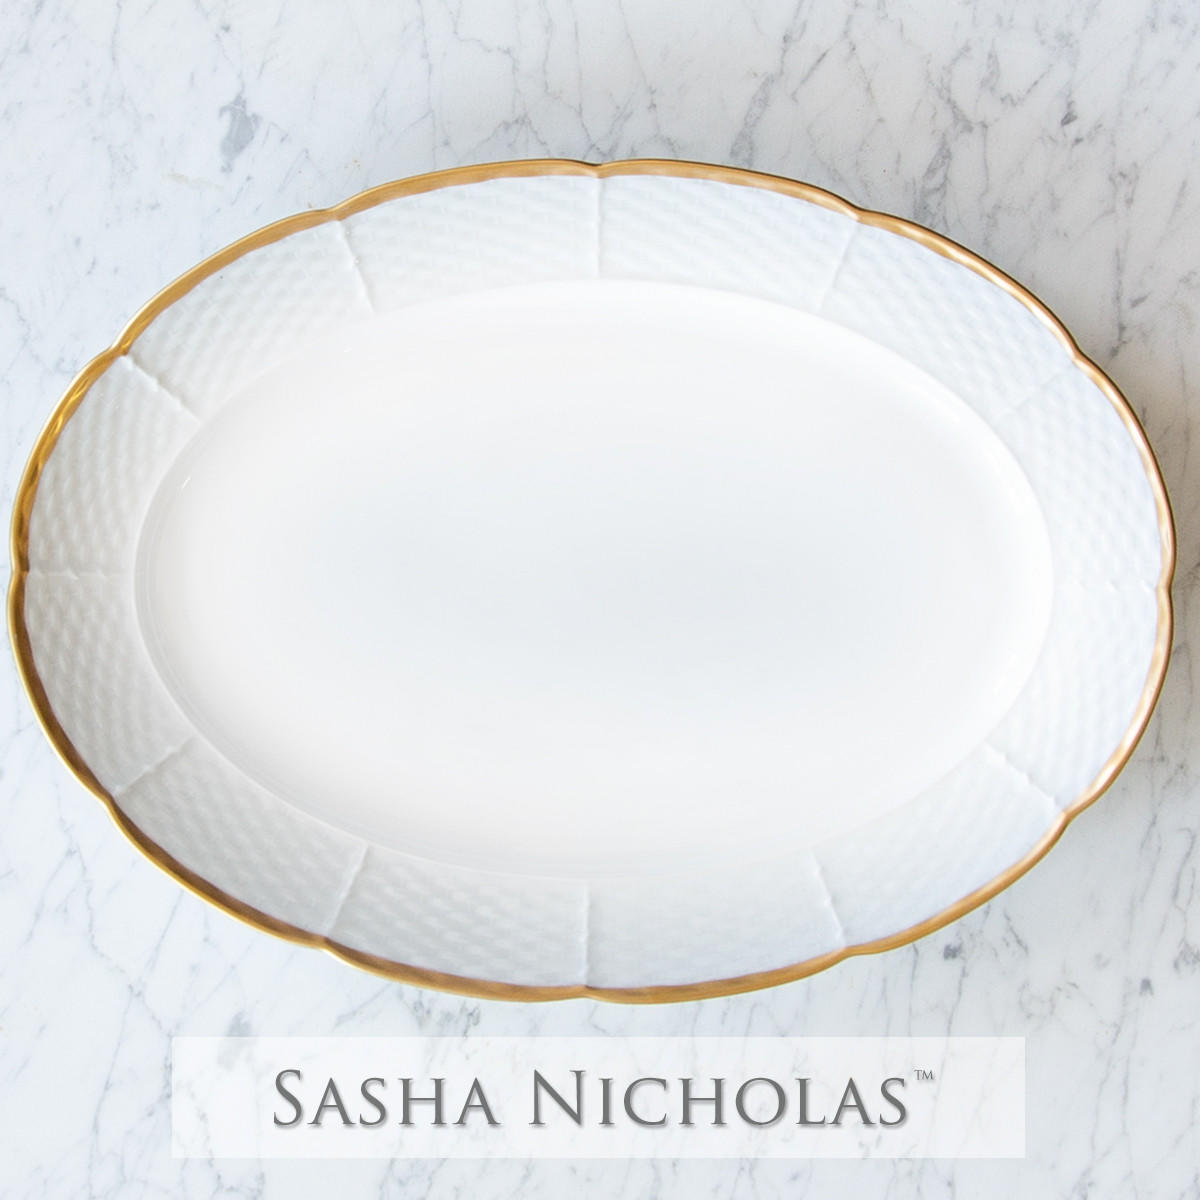 Weave 24k Gold Oval Platter, SNWG131, Sasha Nicholas